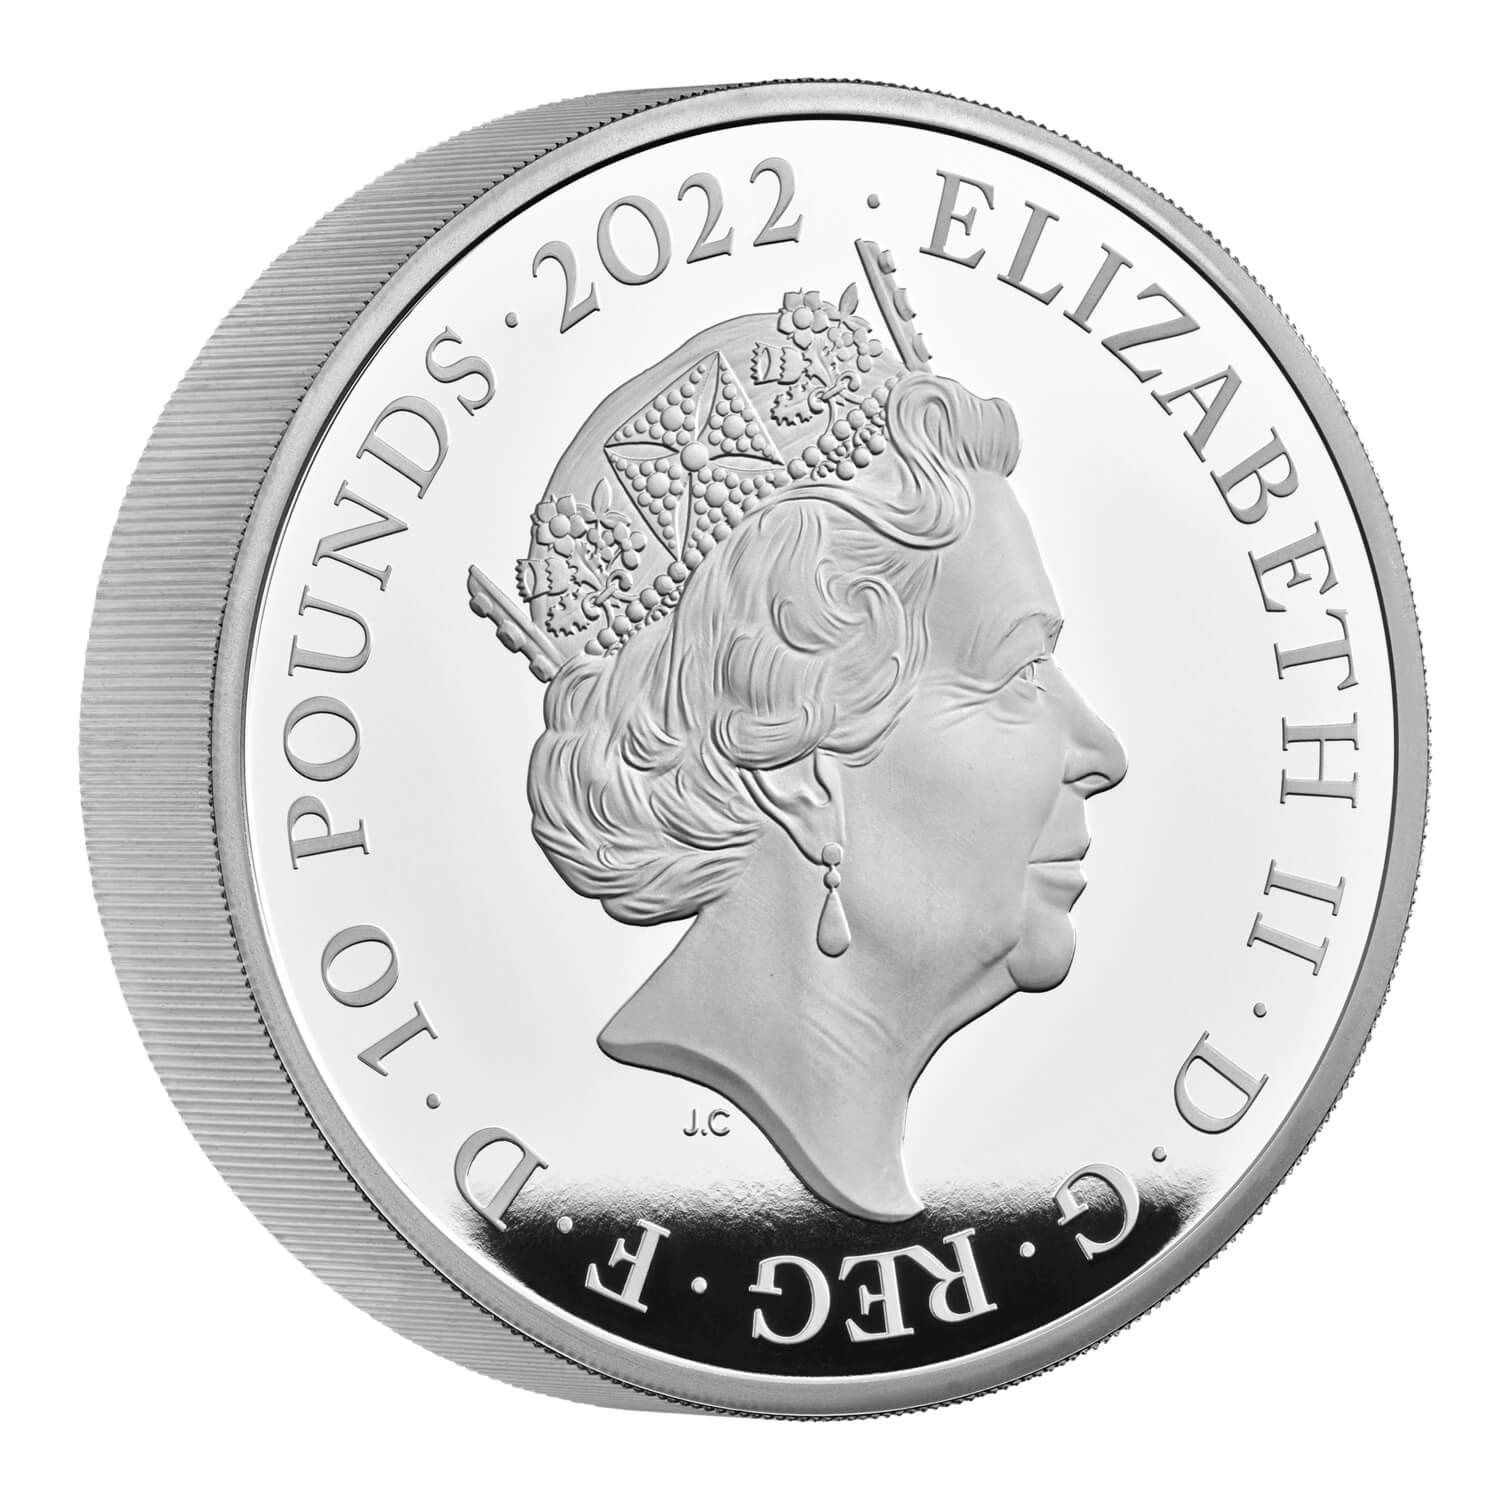 (W185.10.P.2022.UK22E7S10) 10 Pounds UK 2022 10 oz Proof silver - King Edward VII Obverse (zoom)